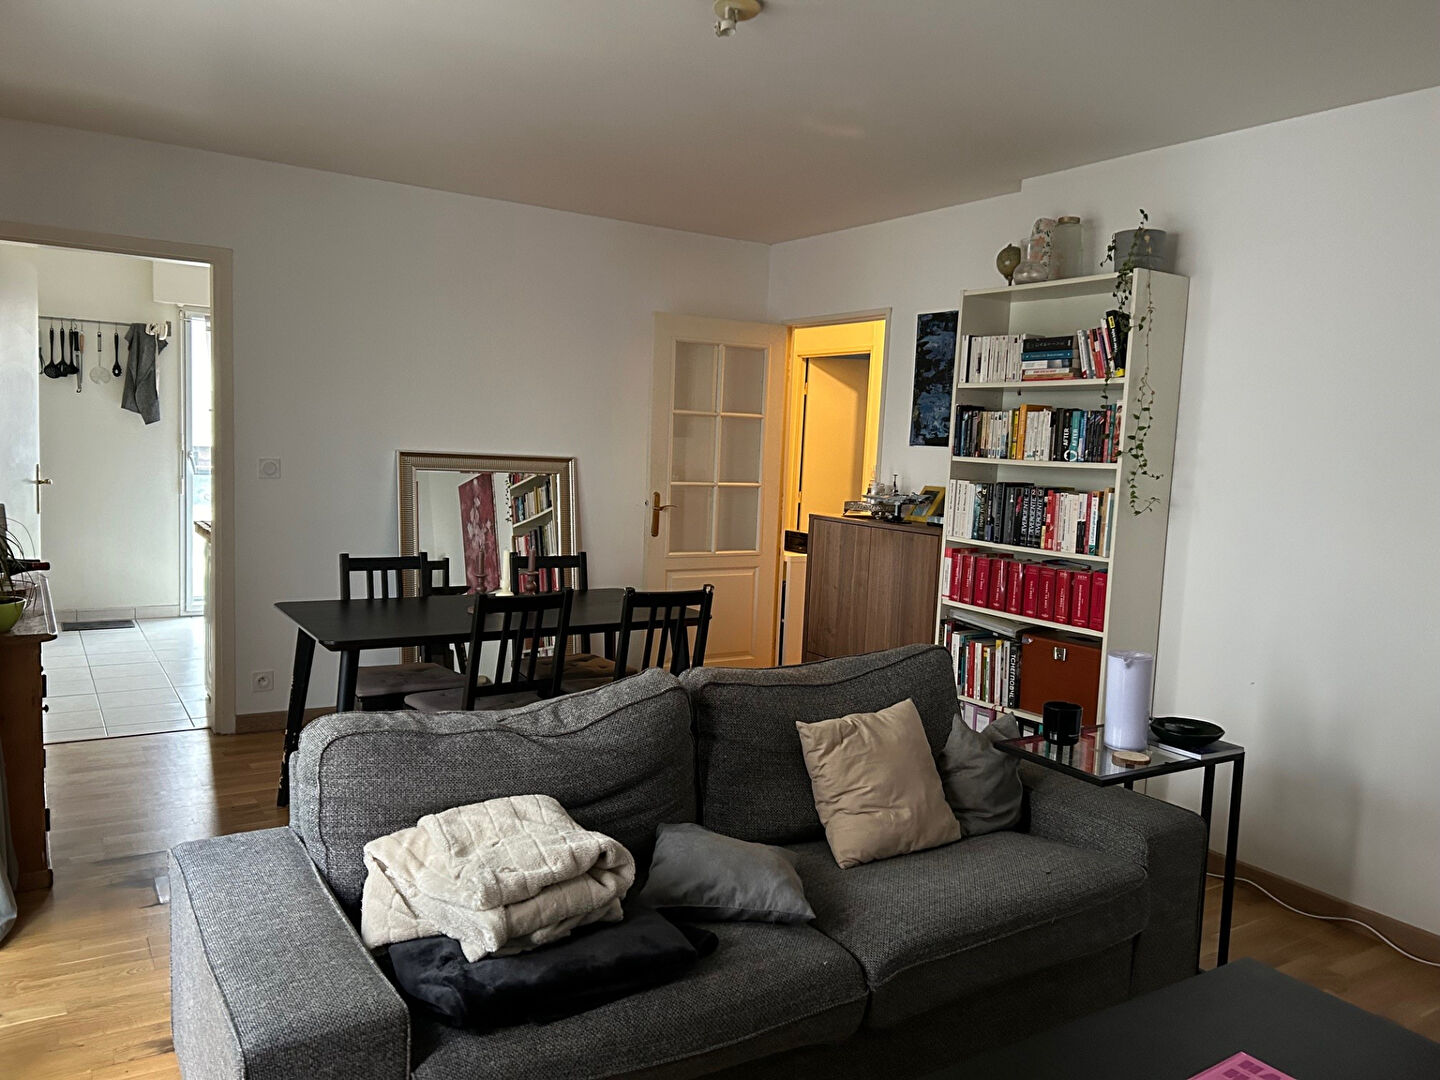 Appartement 2 pièces - 49 m² environ - 46455049b.jpg | Kermarrec Habitation